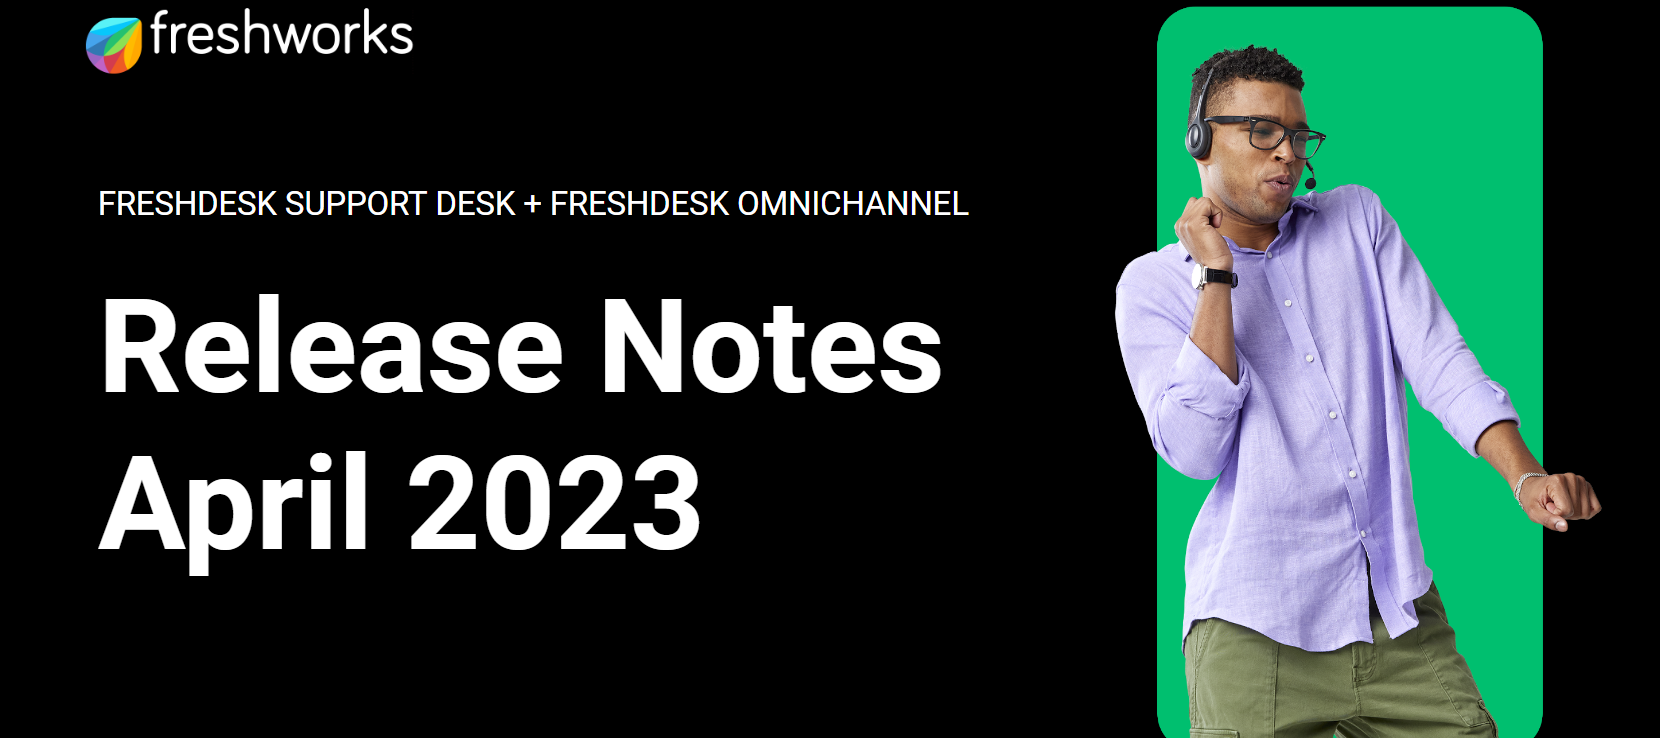 Freshdesk Release Notes - April 2023